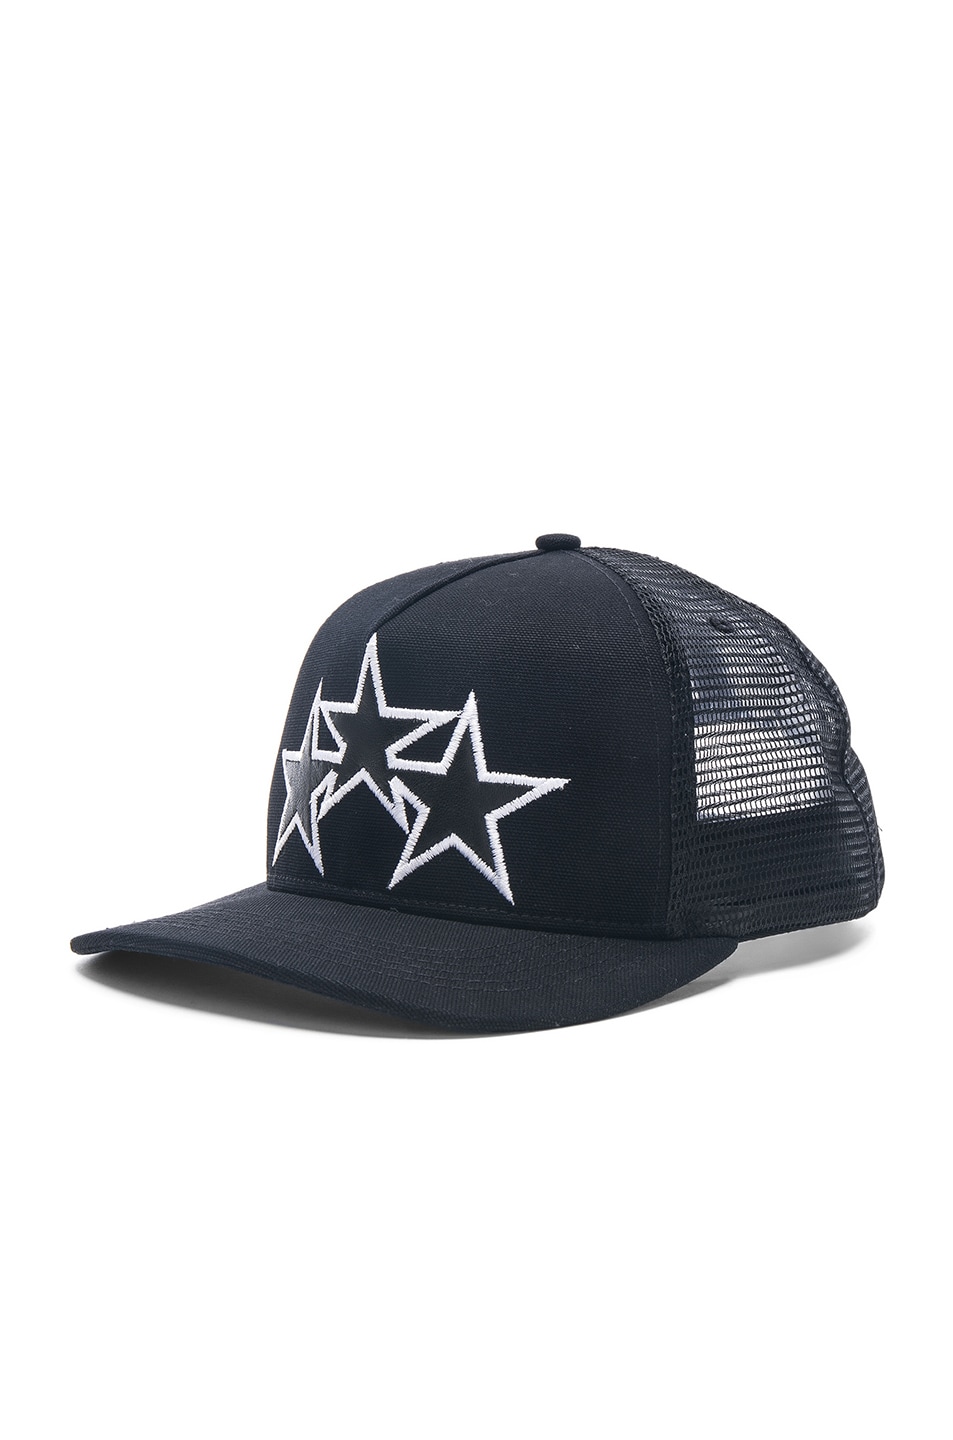 Amiri Star Trucker Hat in Black | FWRD